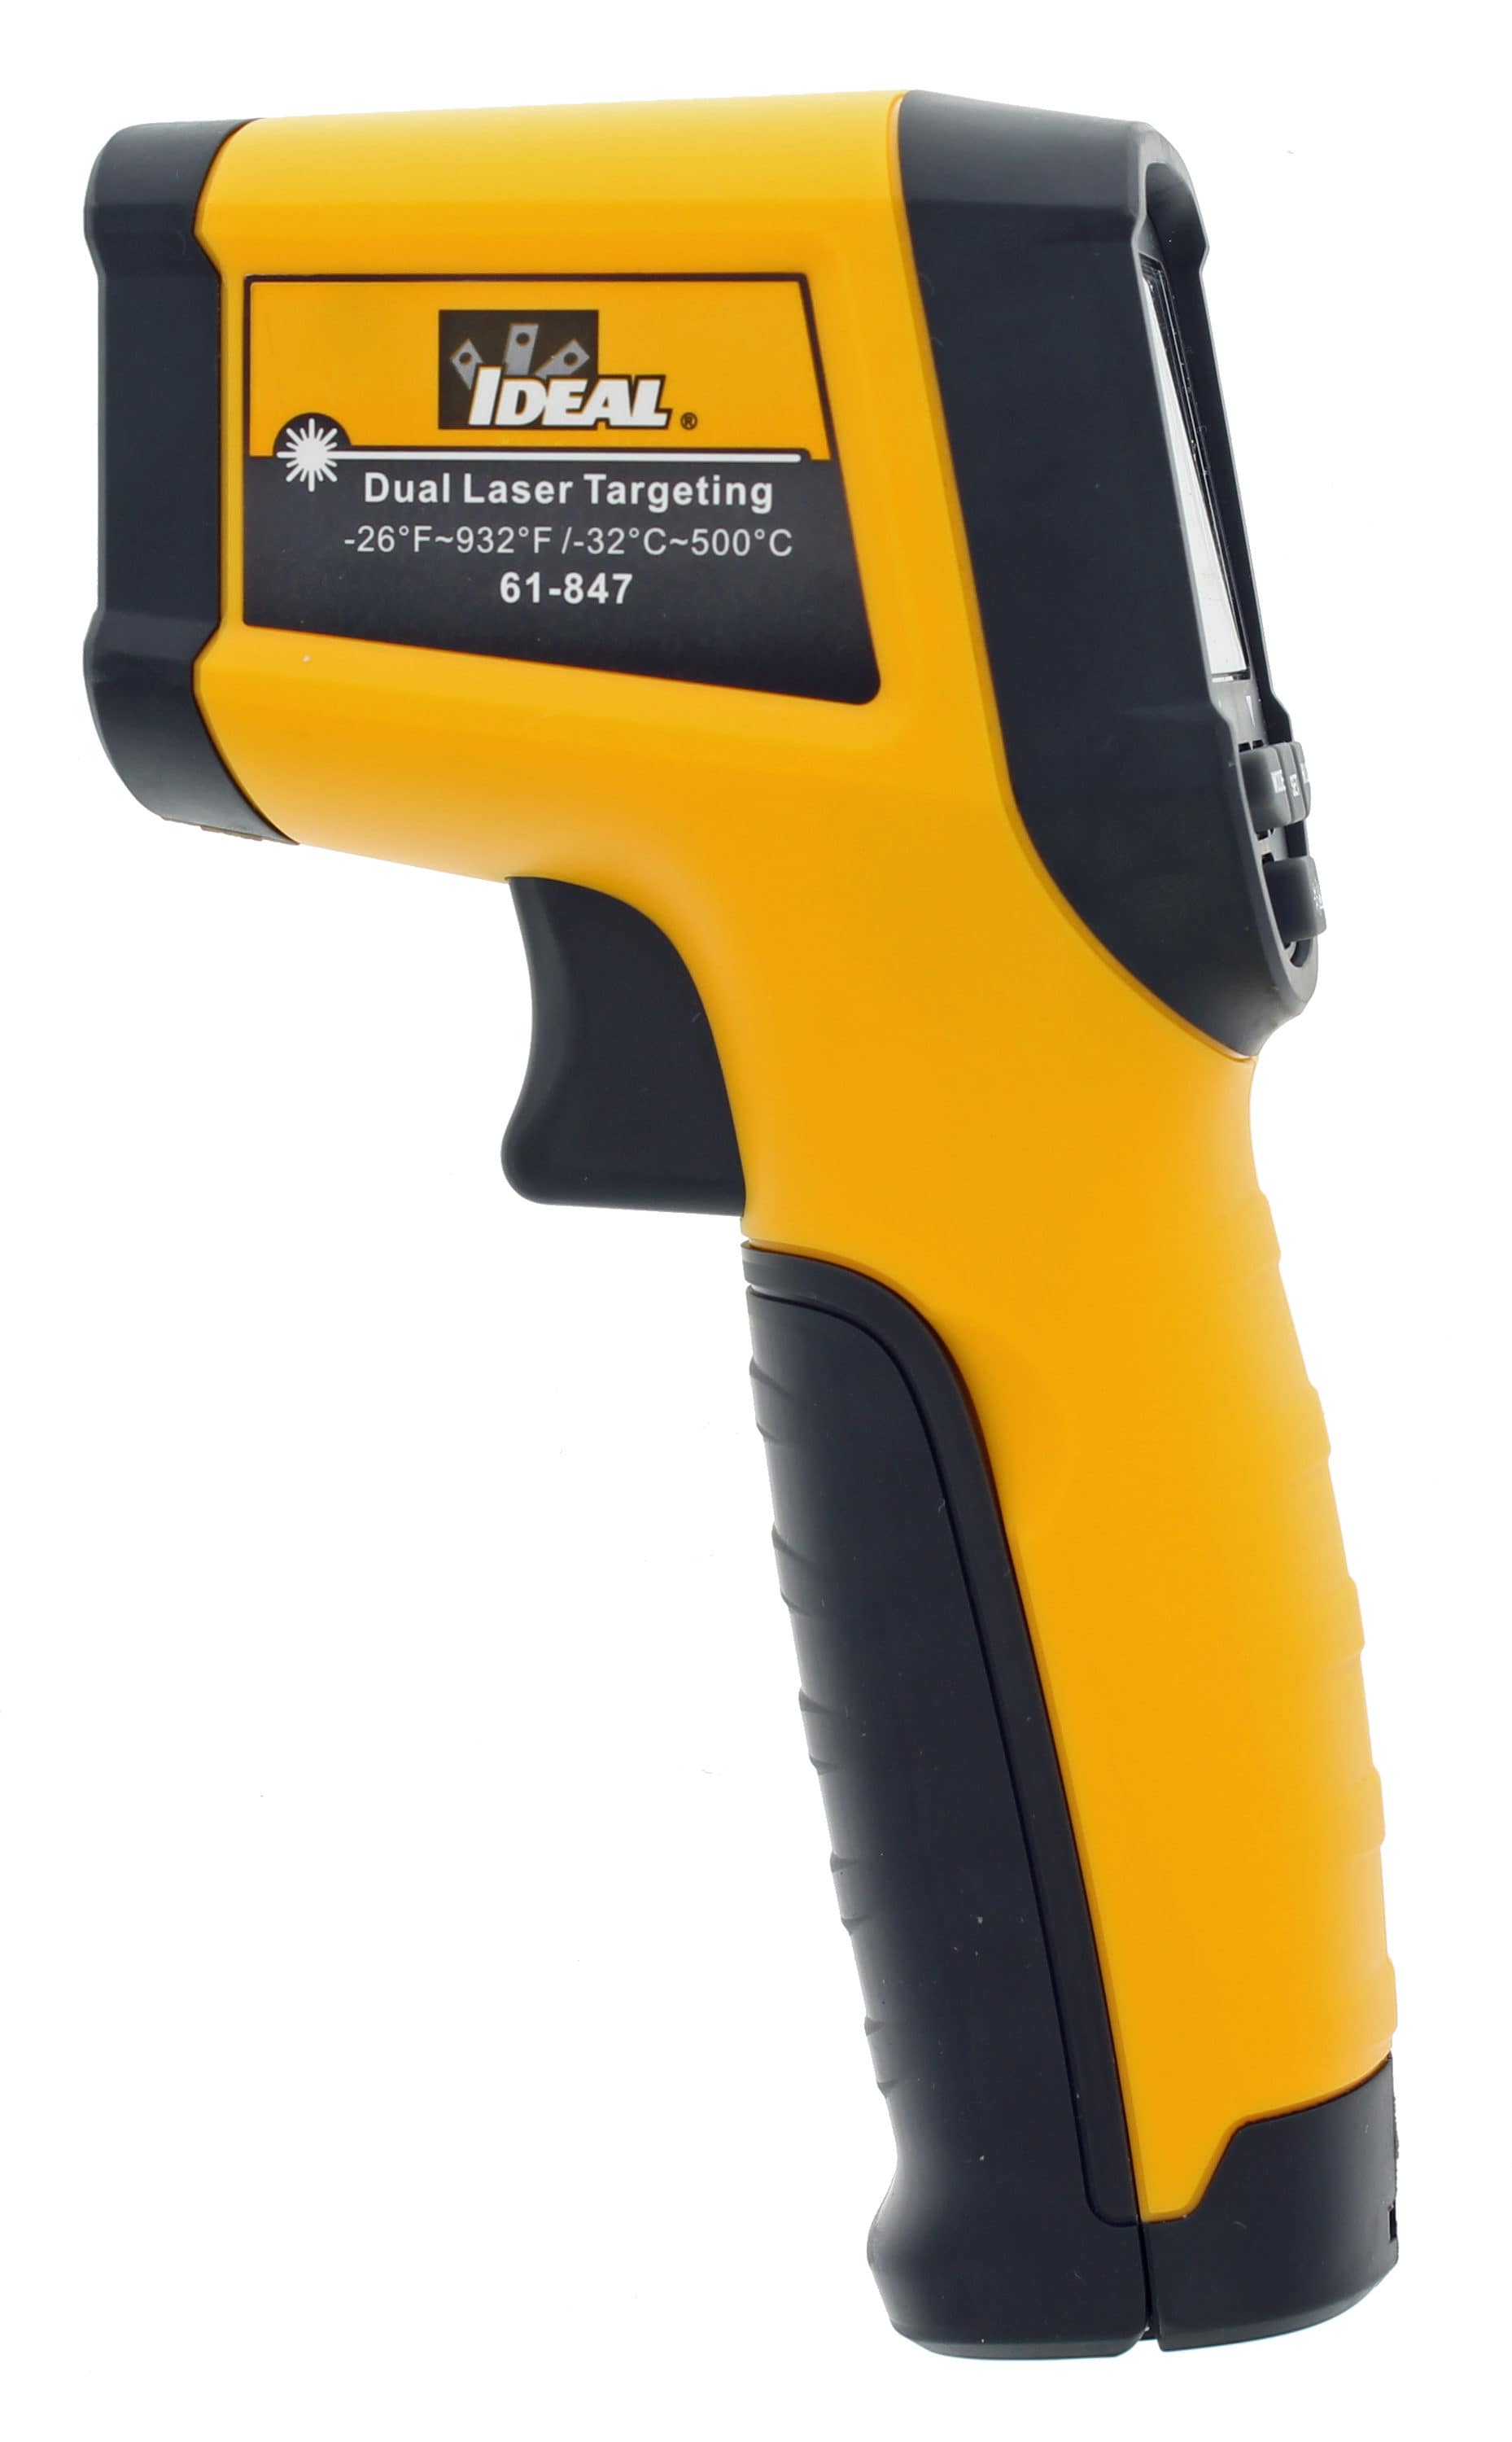 Infrared Thermometer Temperature Gun -58f ~932f, Digital Laser